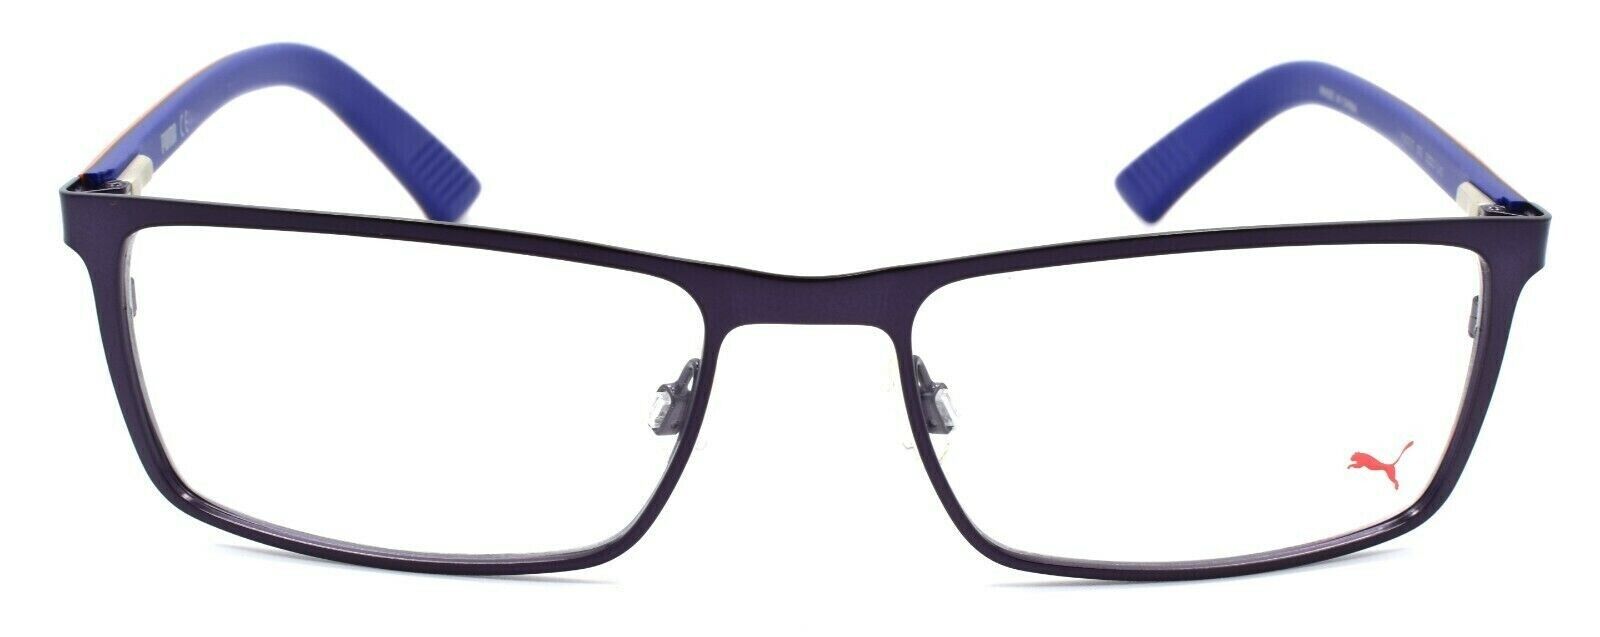 2-PUMA PU0027O 003 Men's Eyeglasses Frames 55-17-140 Blue / Red-889652002361-IKSpecs